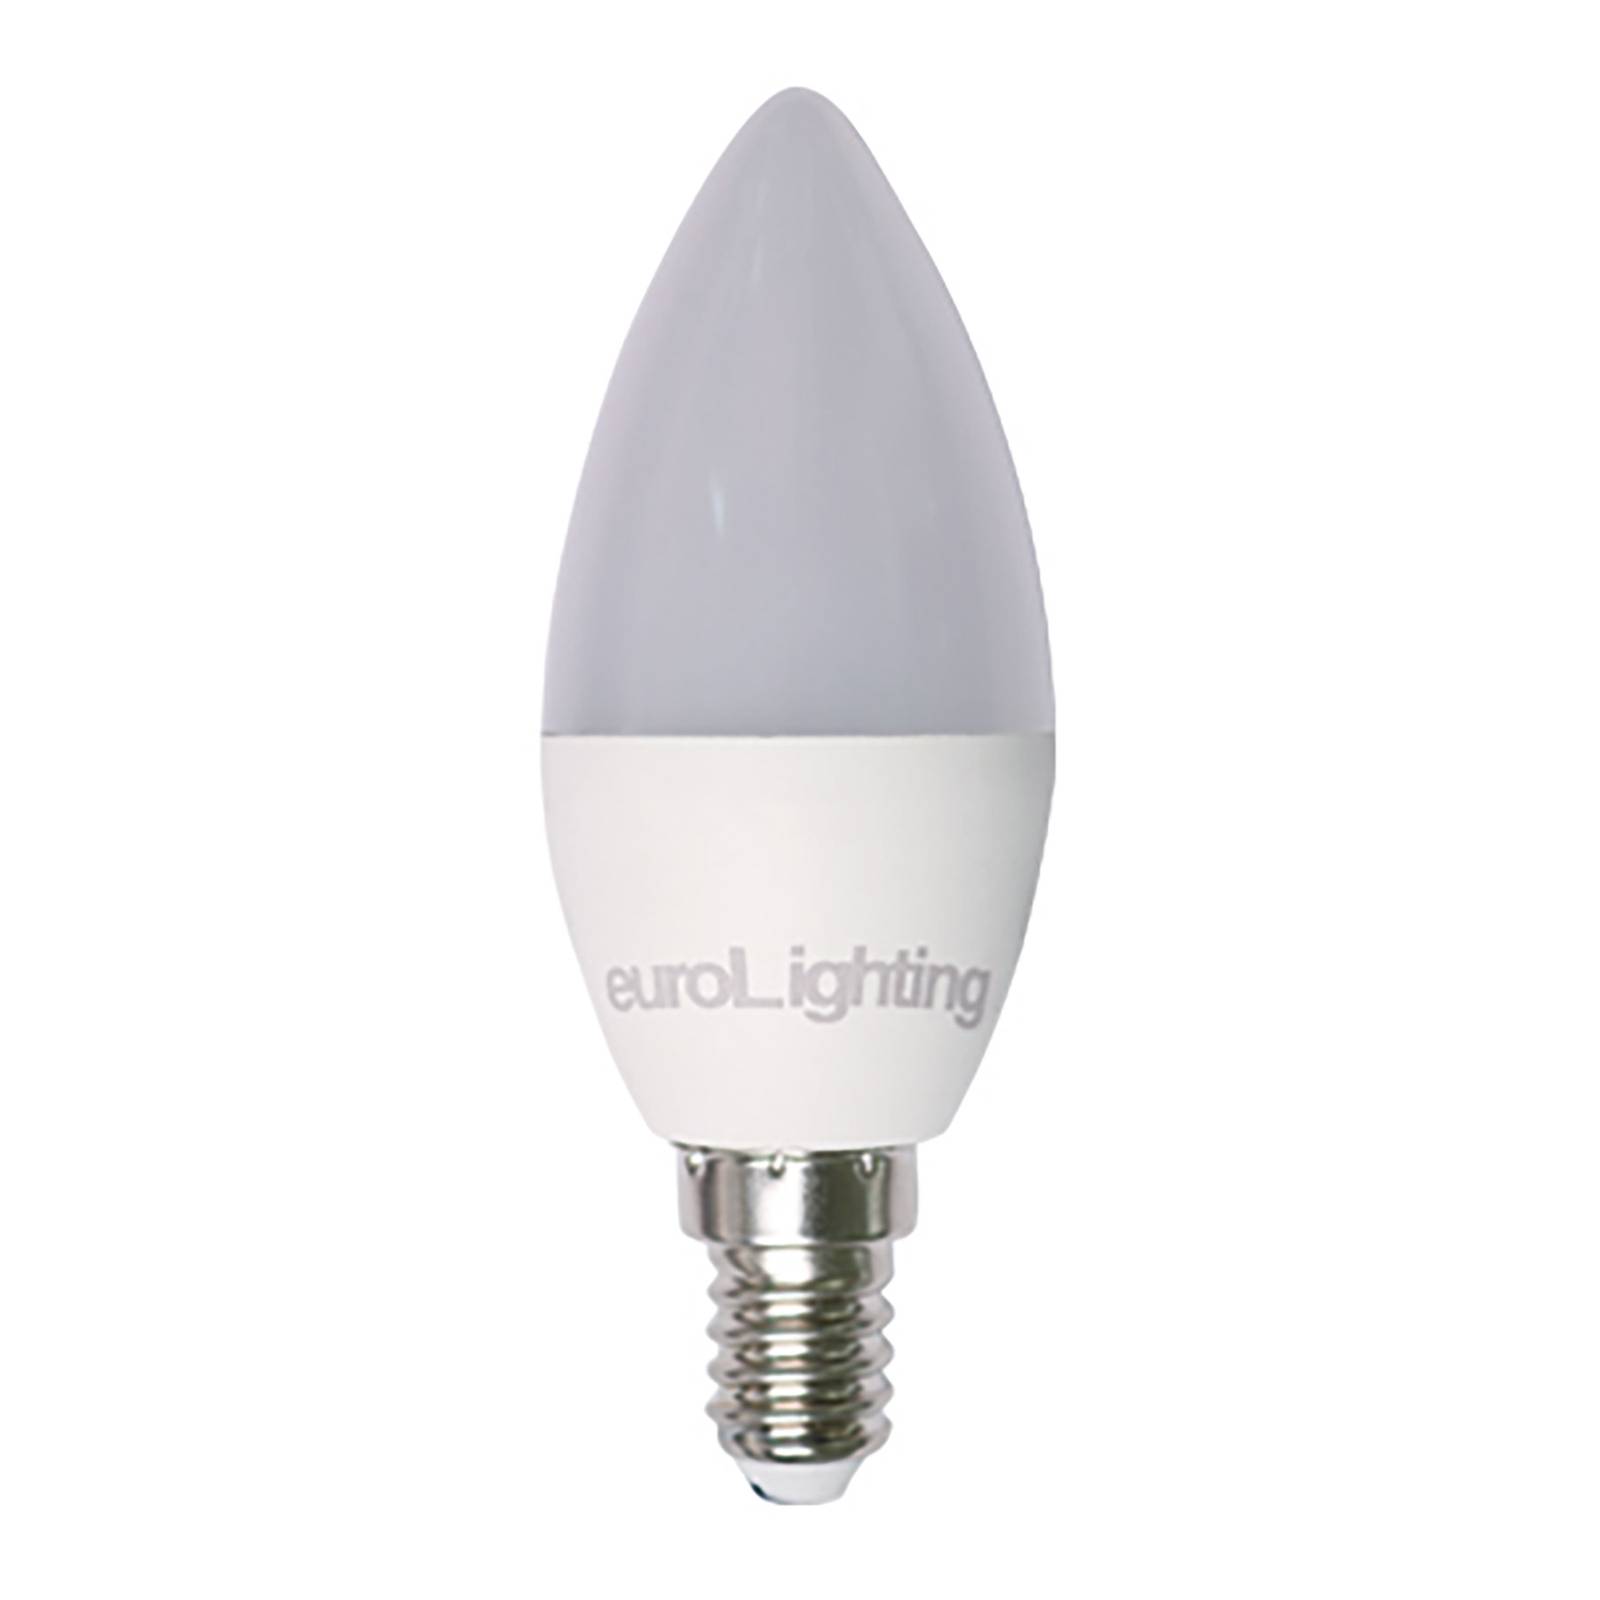 euroLighting LED-Lampe E14 4W Vollspektrum 3.000K Ra98 Step-dim